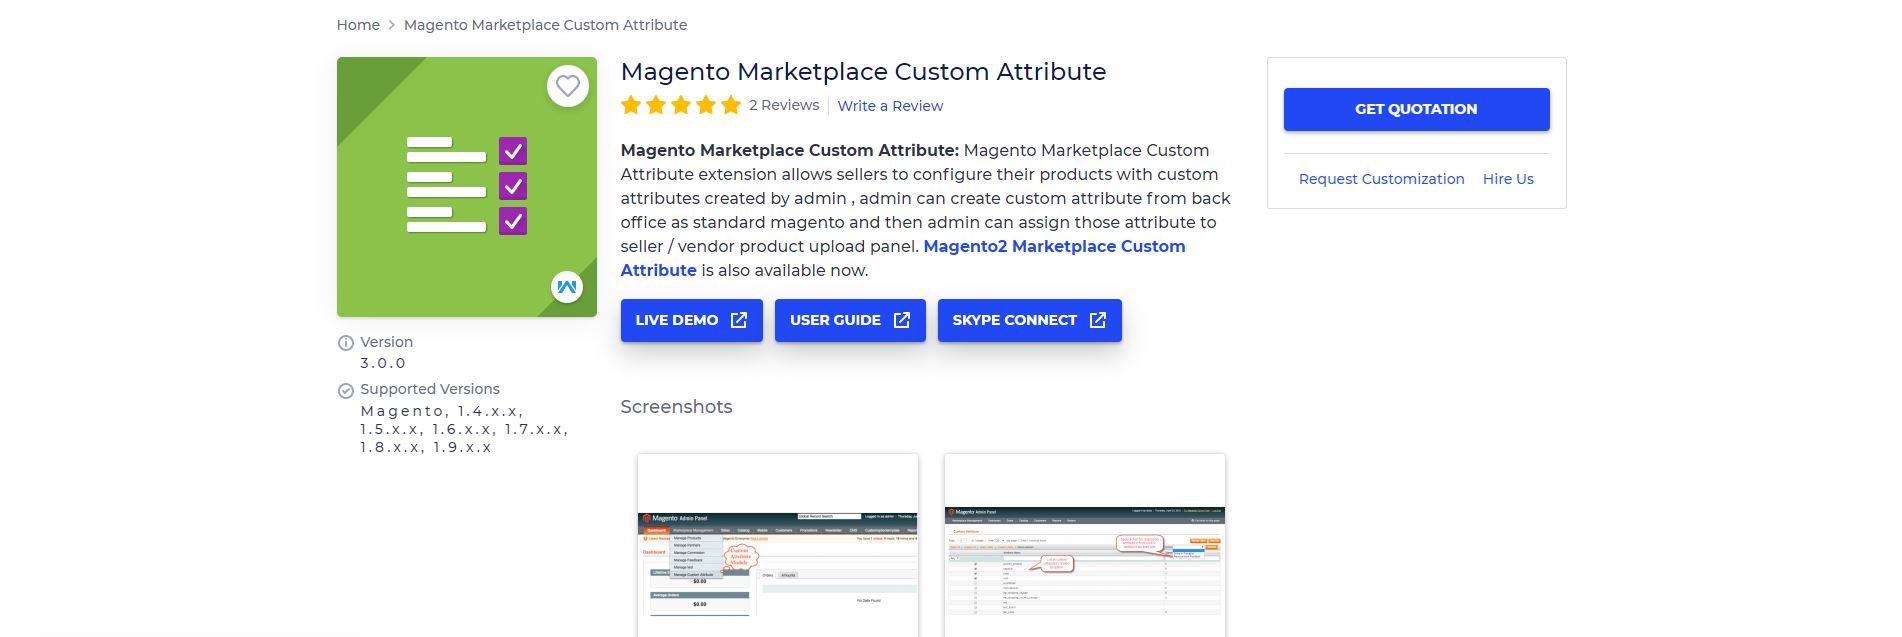 Magento customer attributes extension